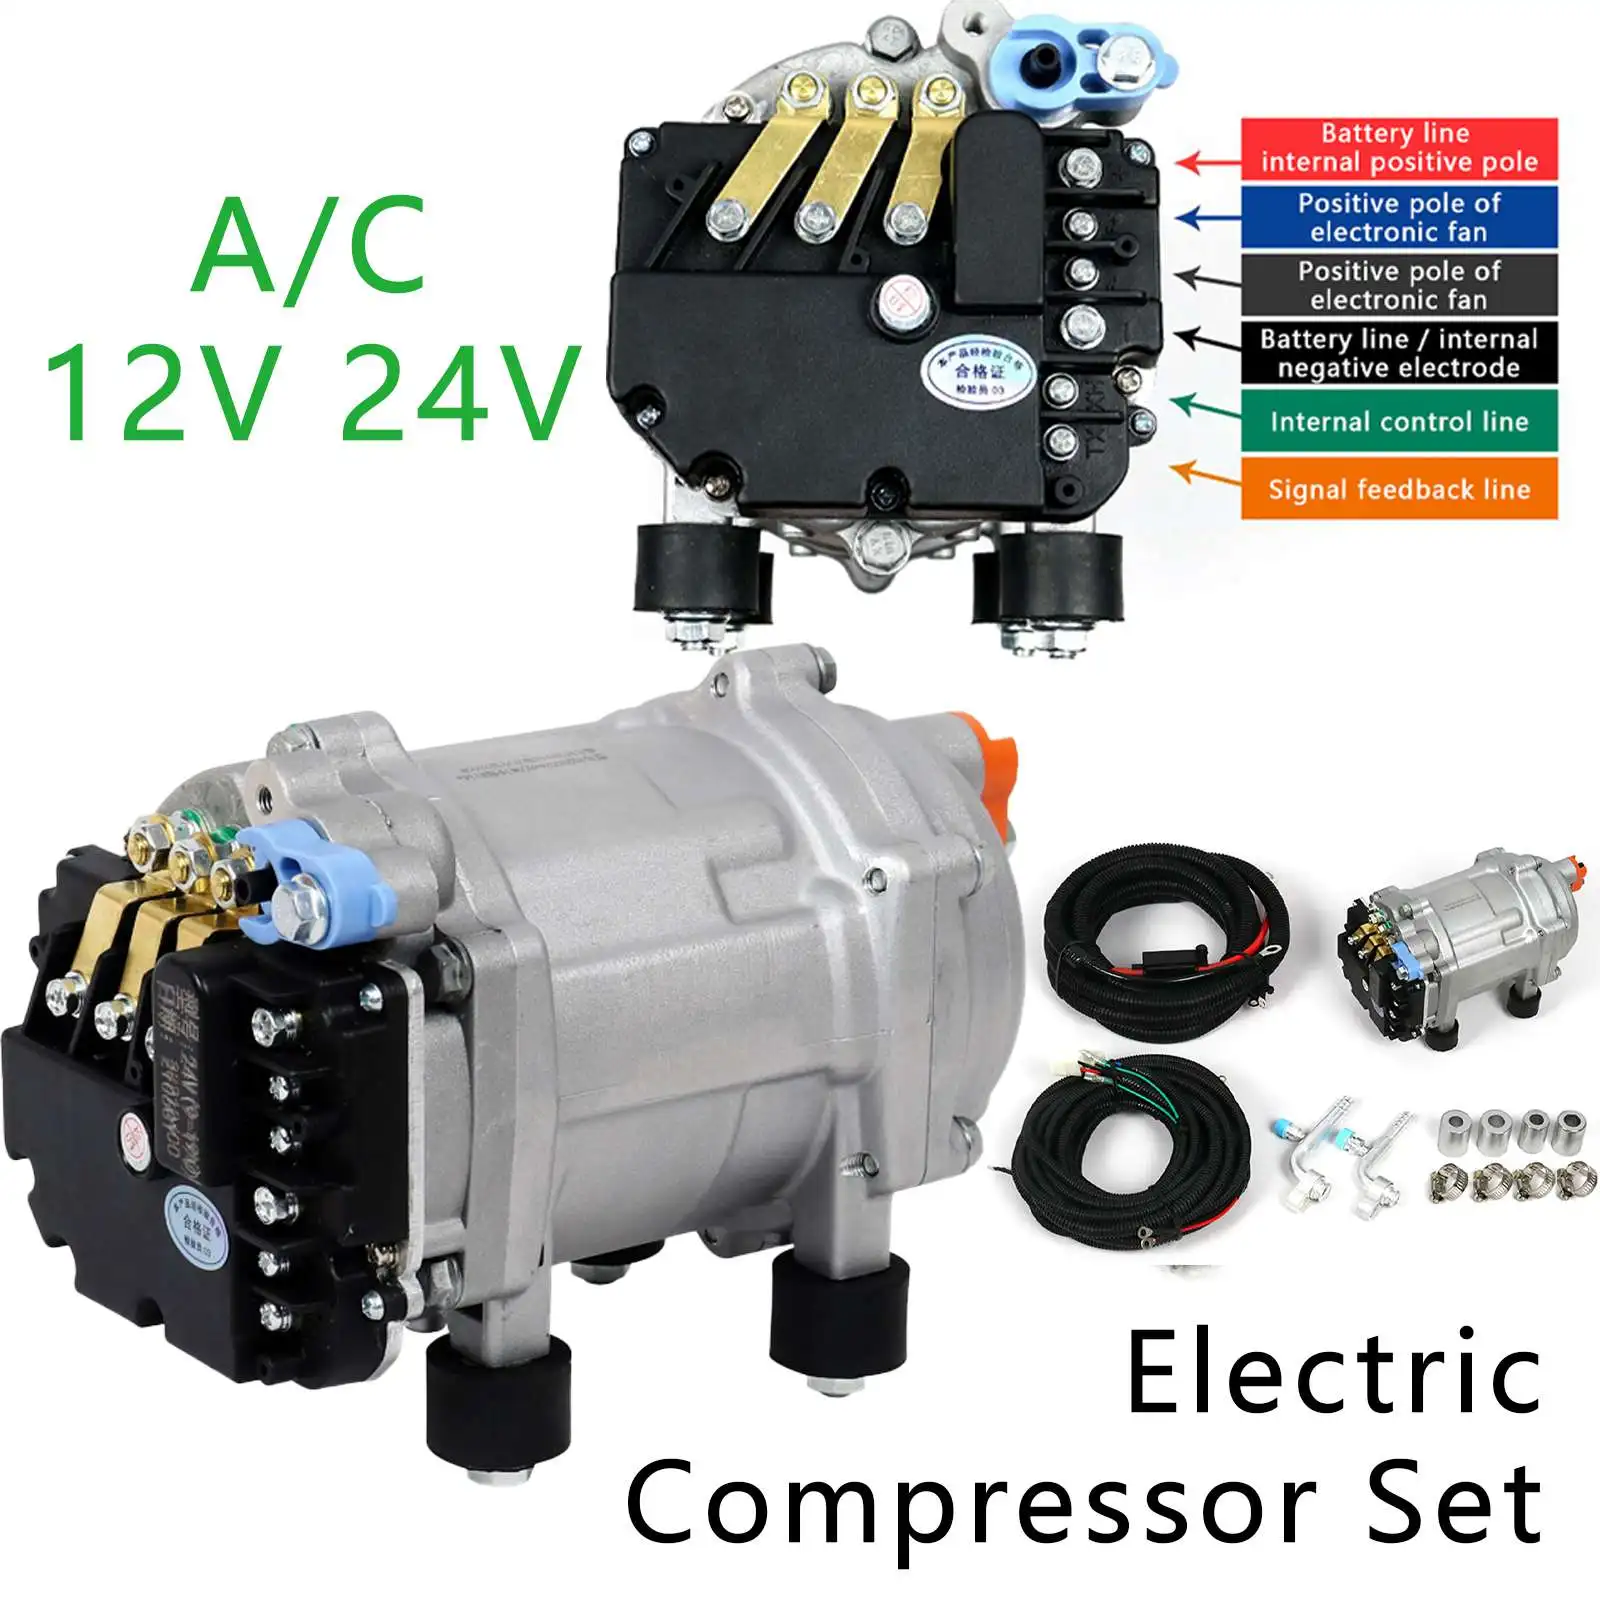 A/C 12V 24V Electric Compressor Set for Auto DC Air Conditioning Car Truck Bus 